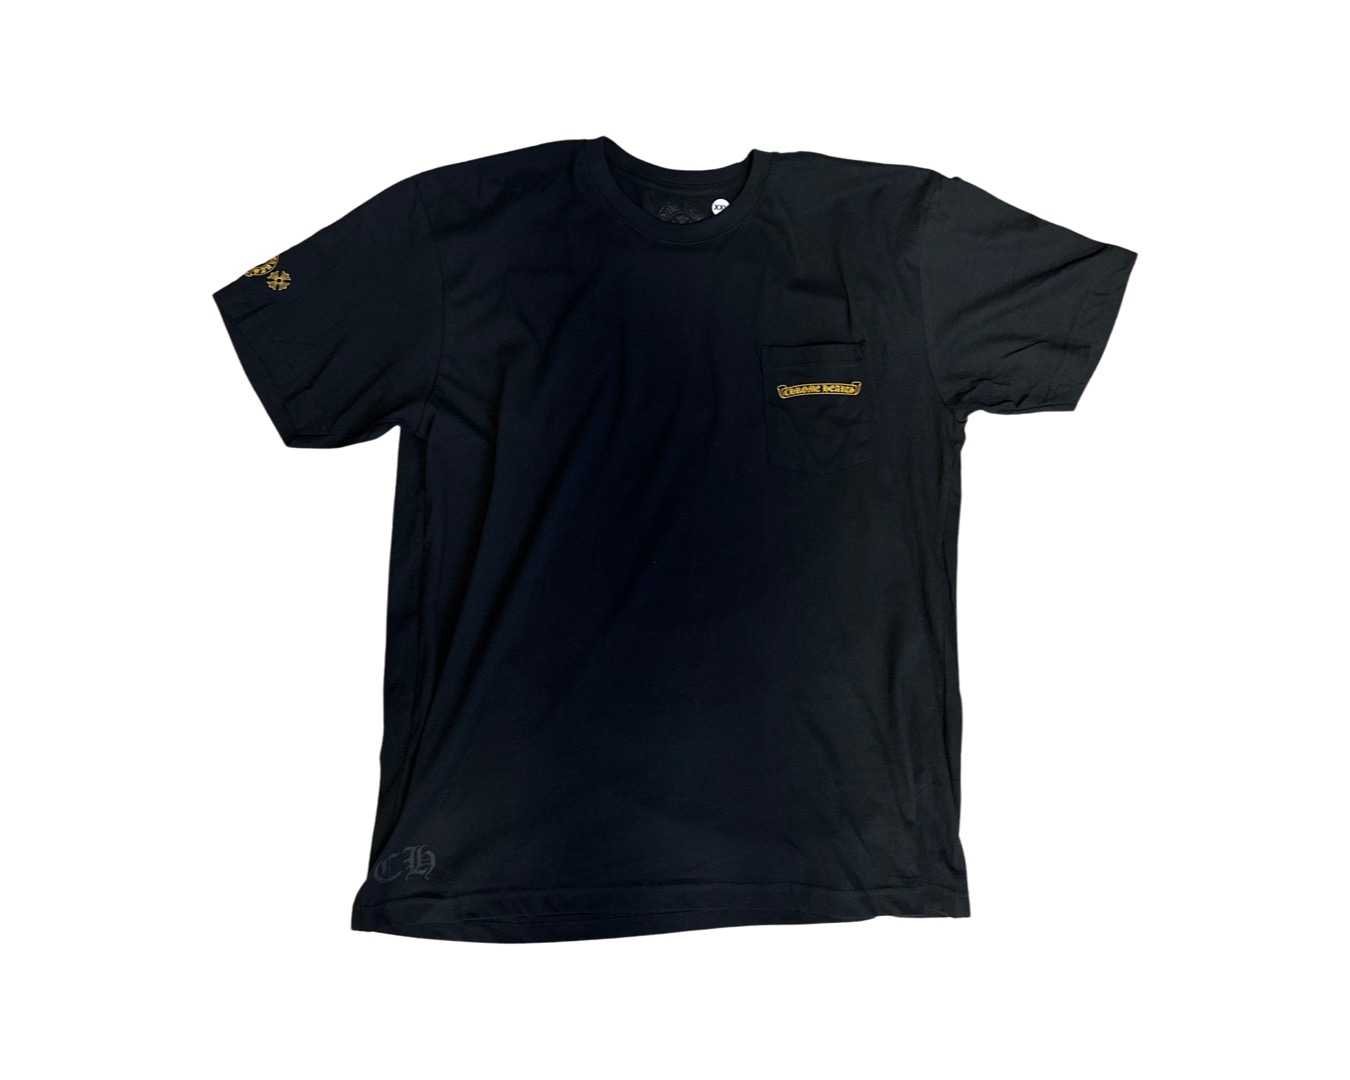 Chrome Hearts Cross T-Shirt Black Gold